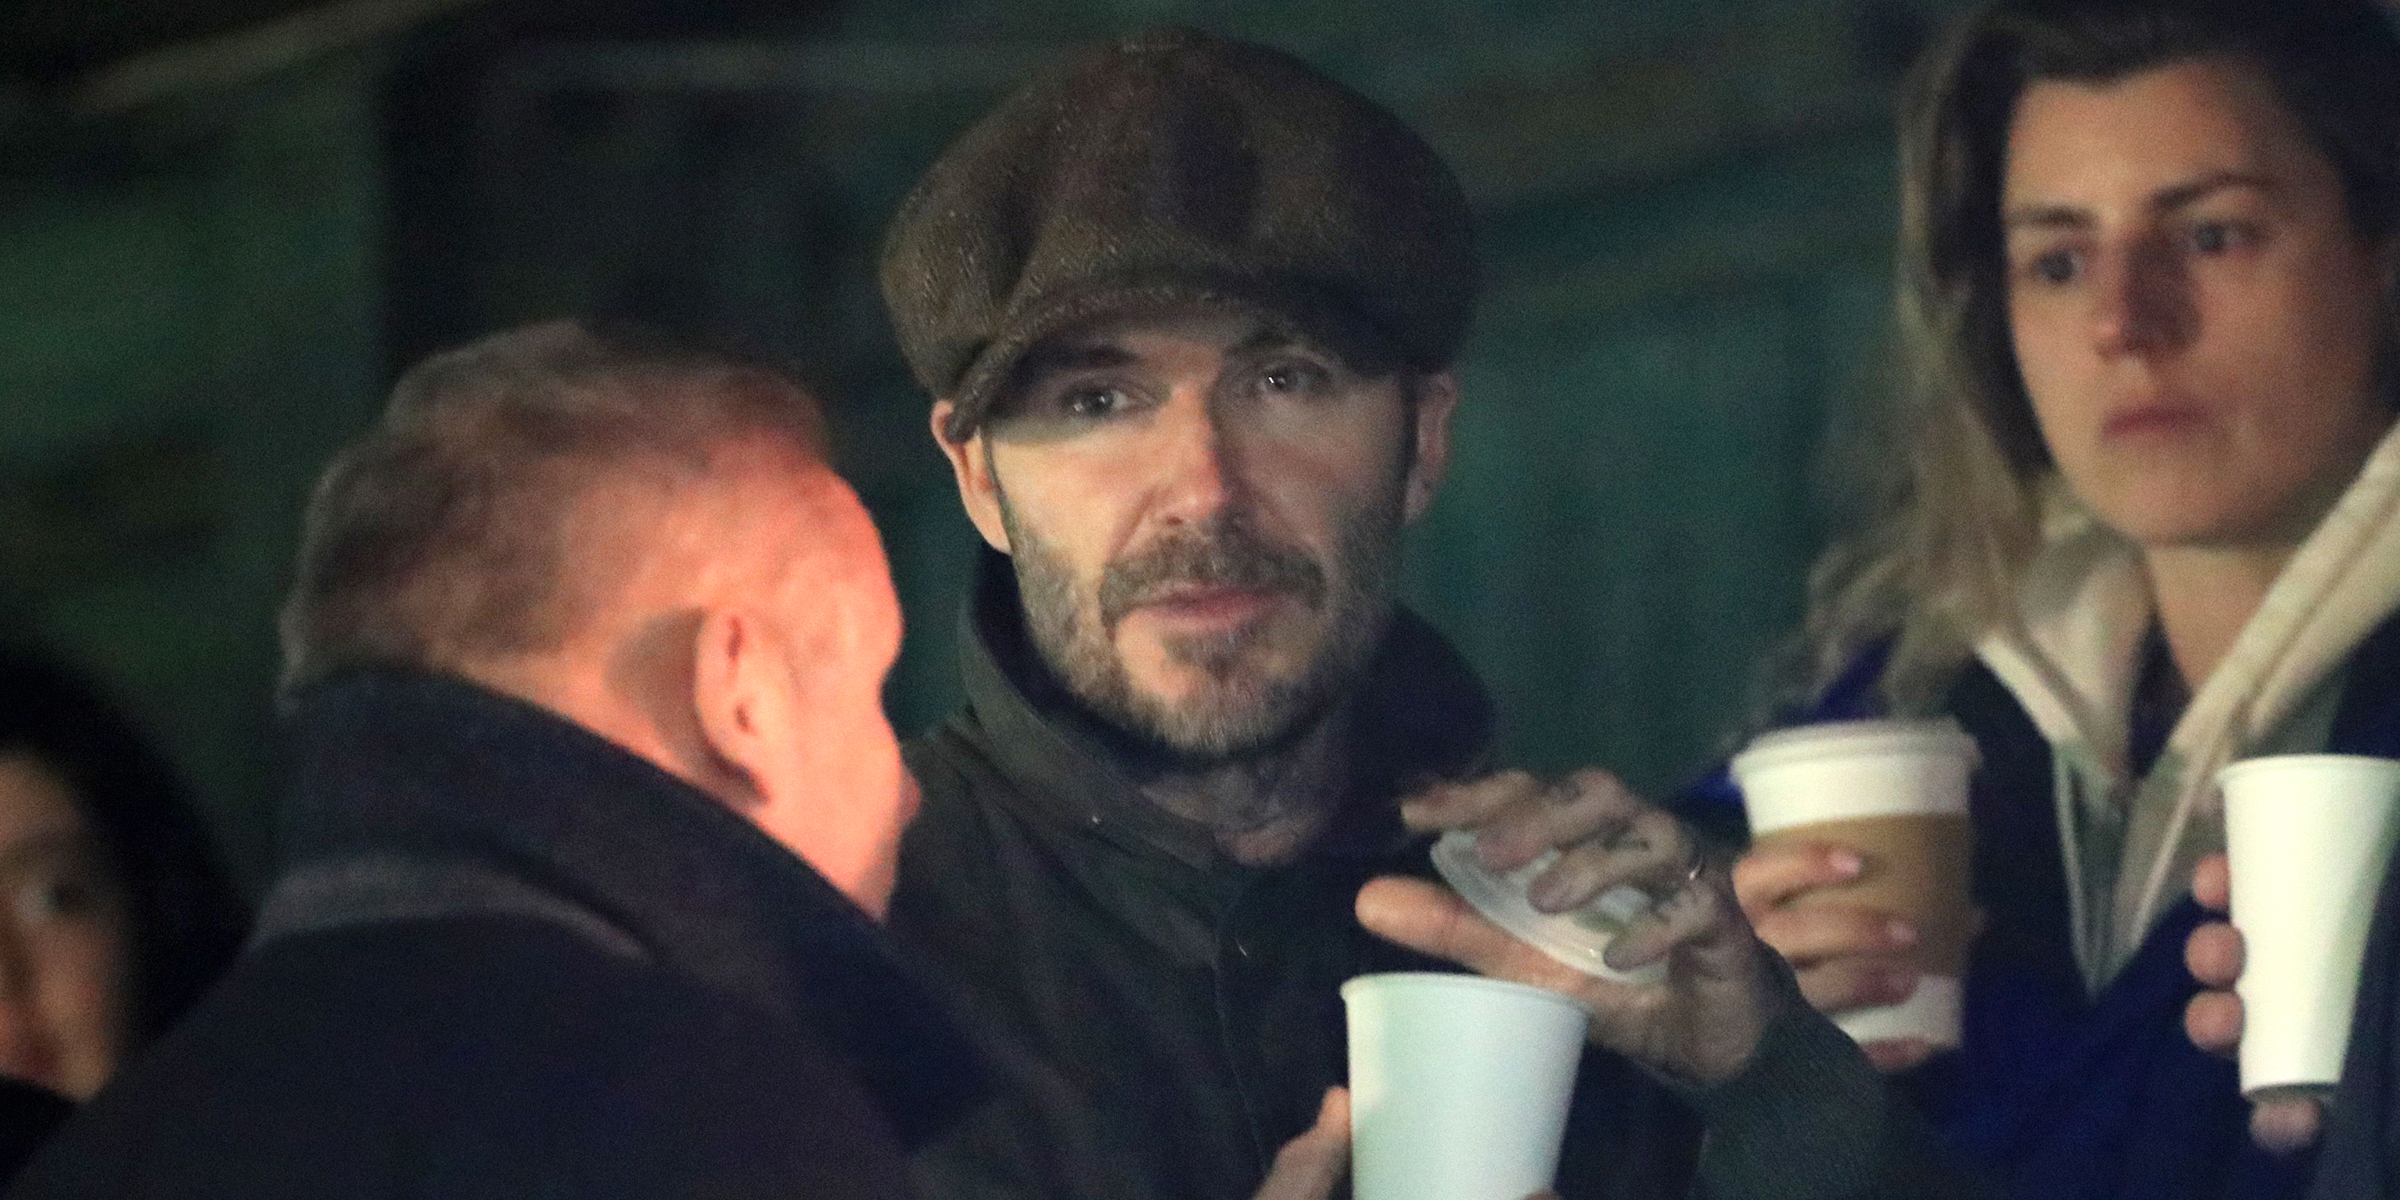 David Beckham | Source : Getty Images